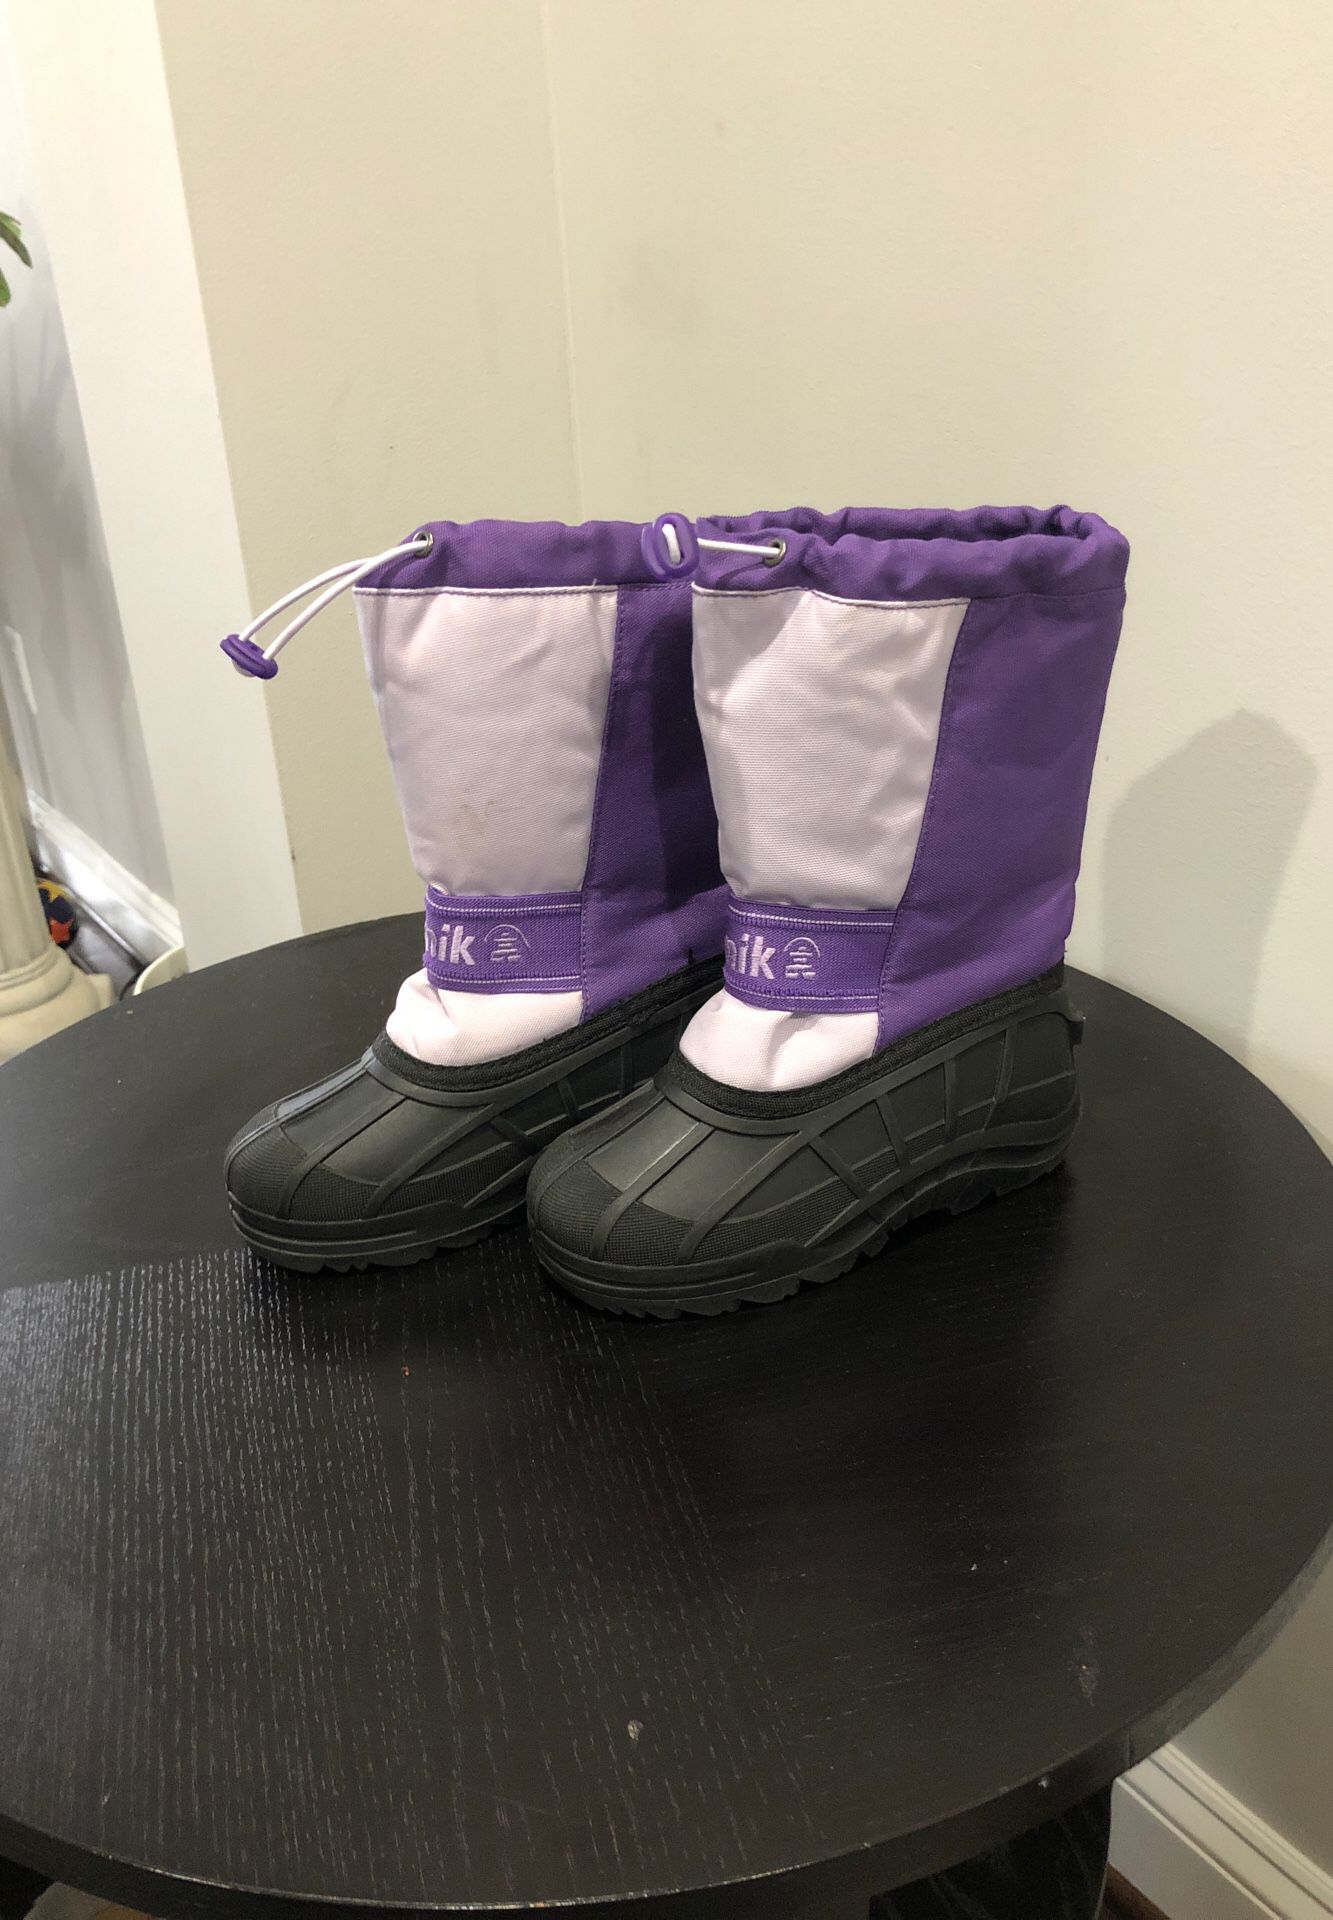 Kamik purple little girls snow boots